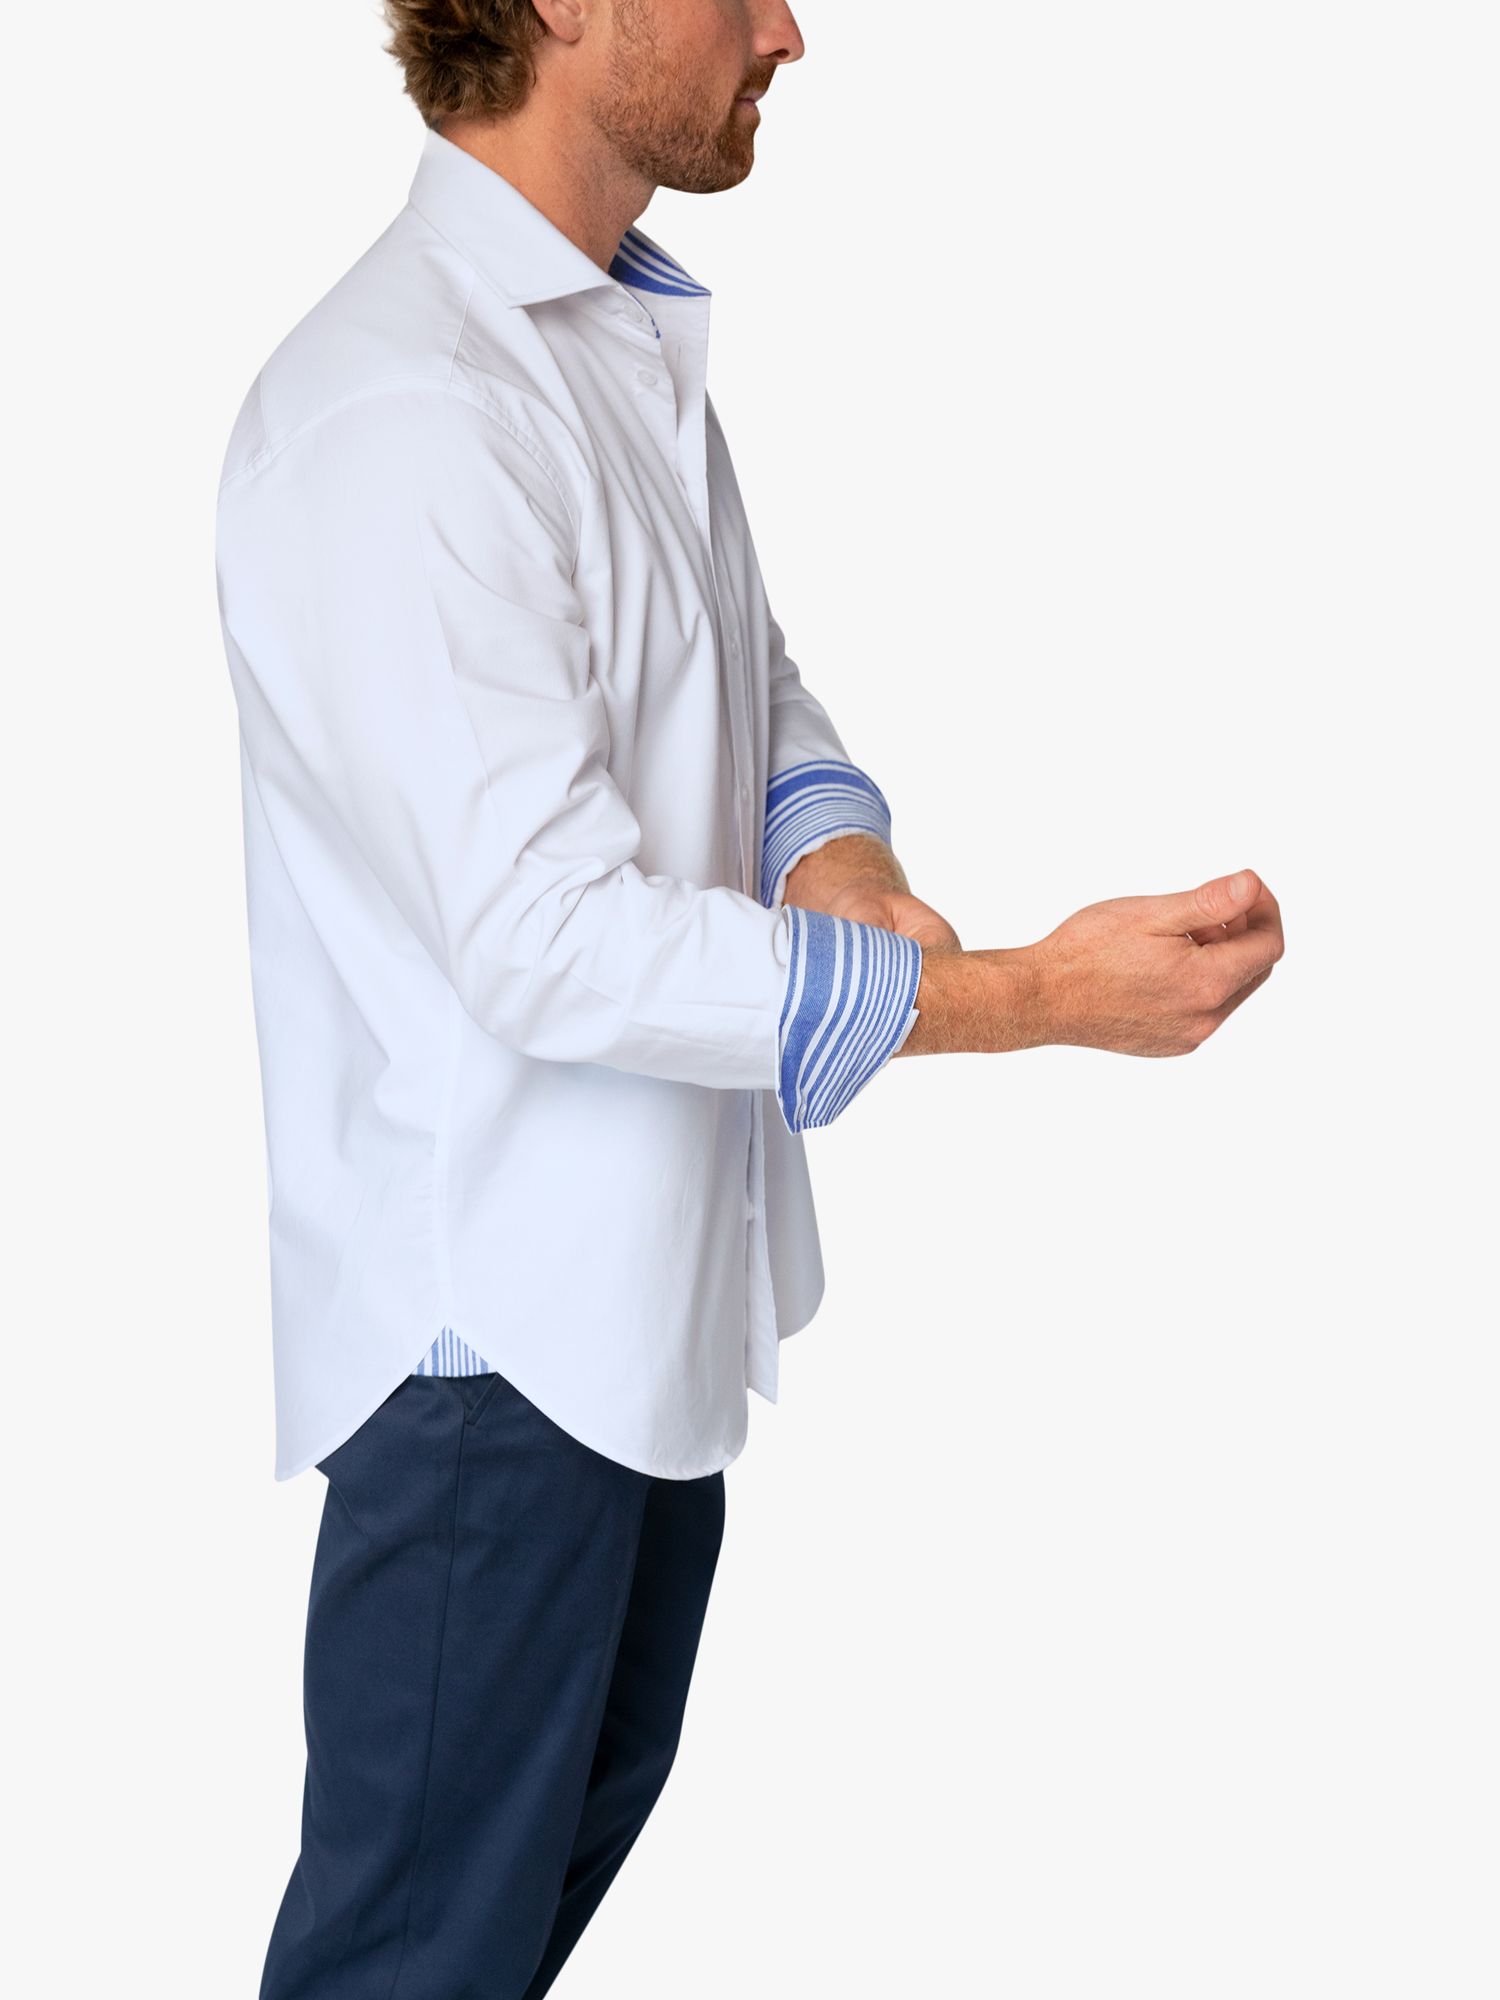 KOY Organic Cotton Oxford Shirt, White, XL